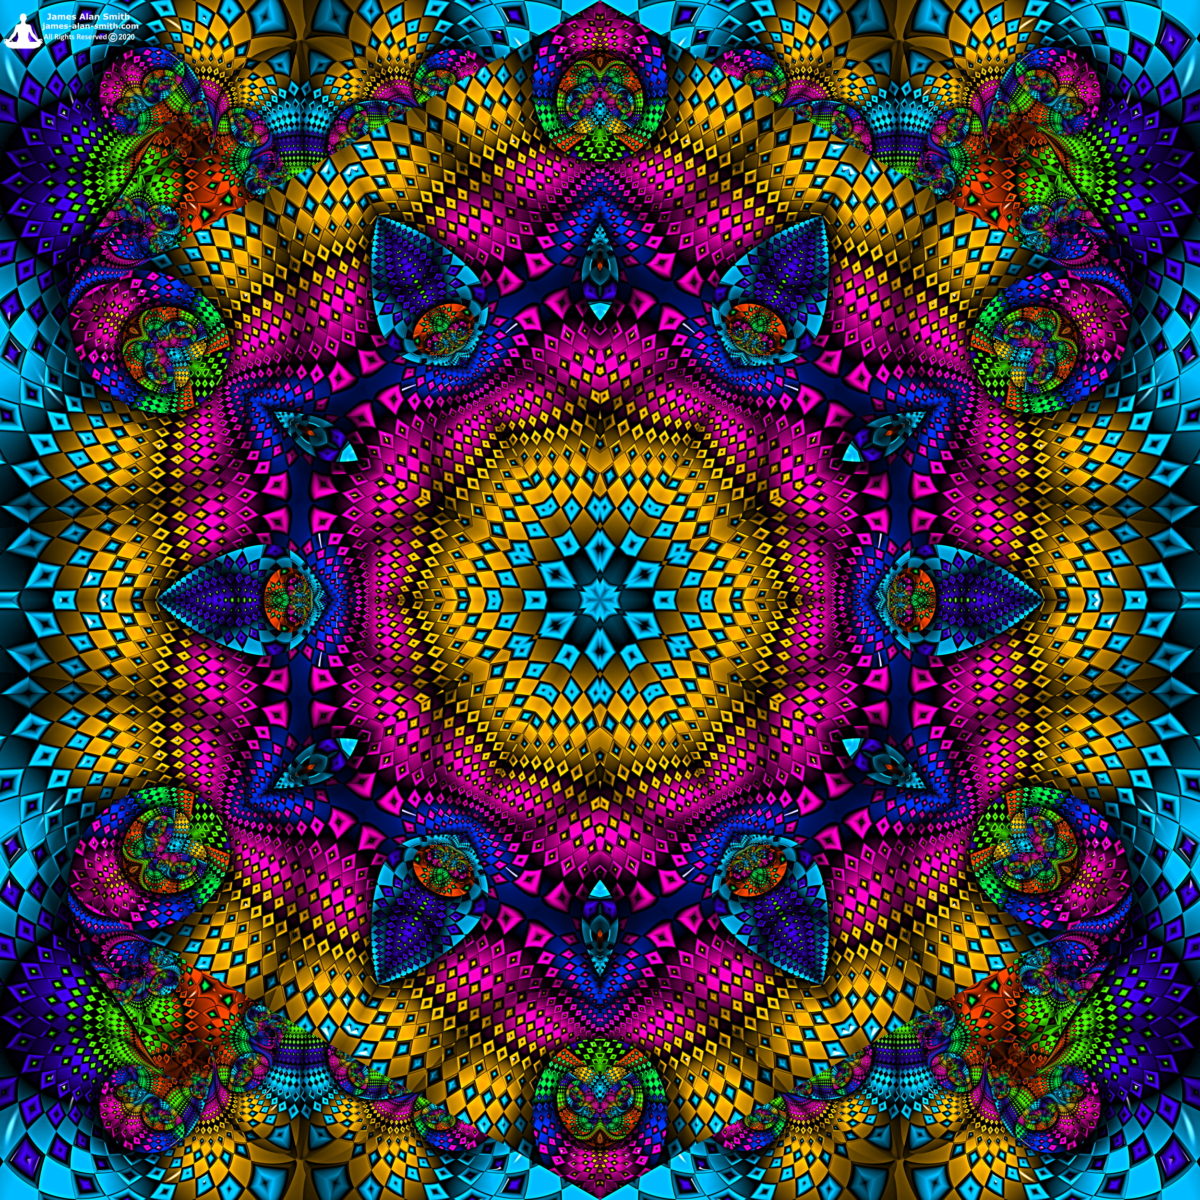 Unusual Mandala Series #02052020: Artwork by James Alan Smith